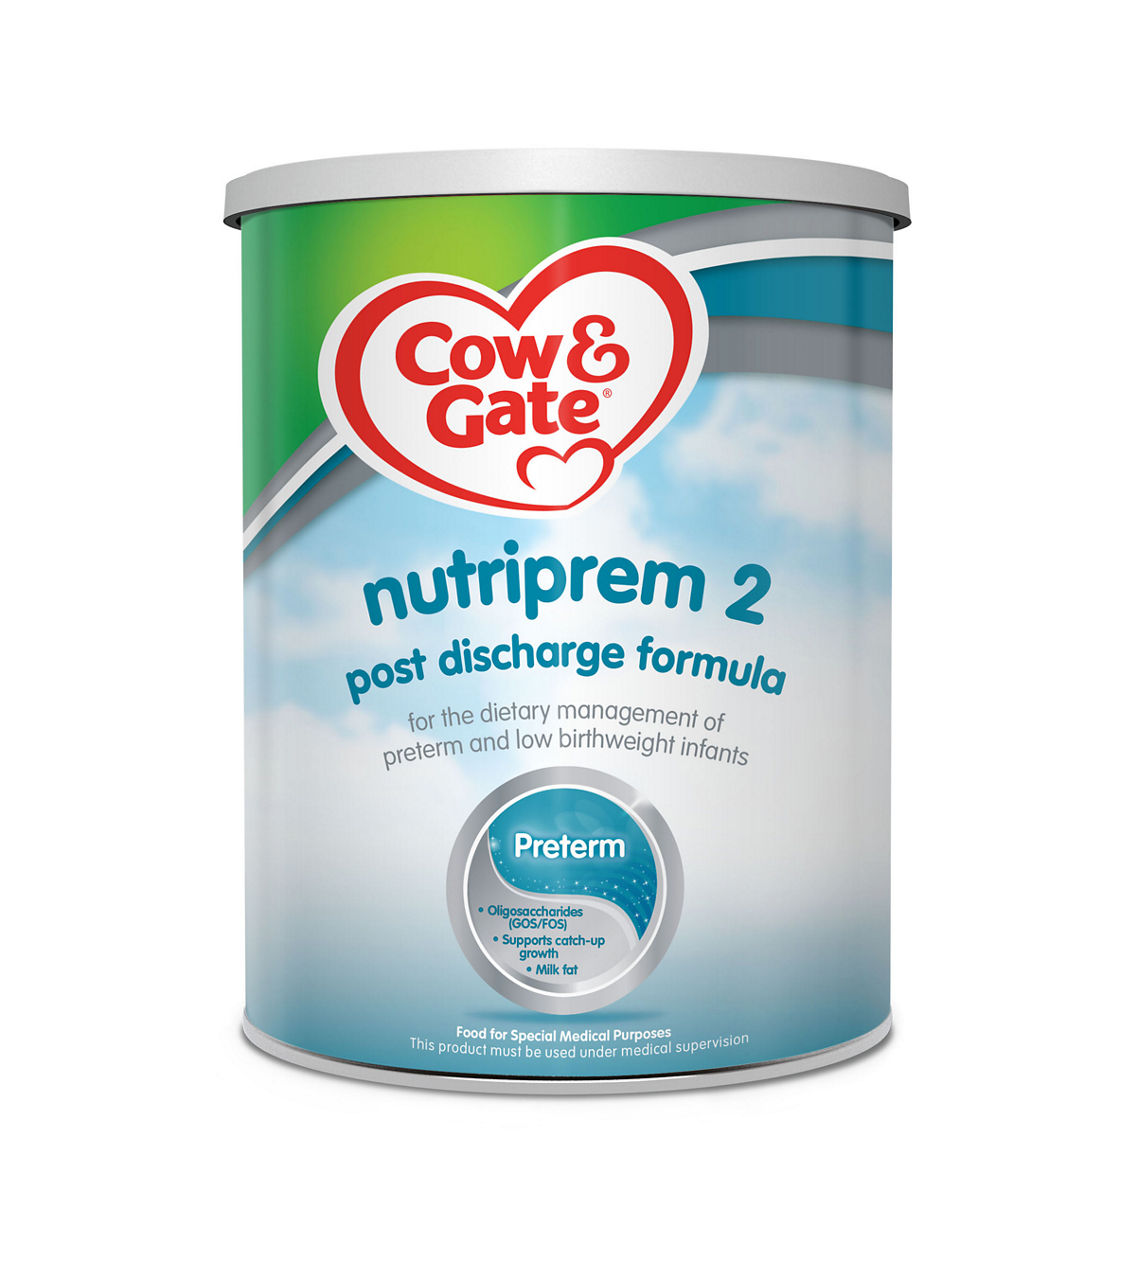 Cow & Gate nutriprem 2 post-discharge powder